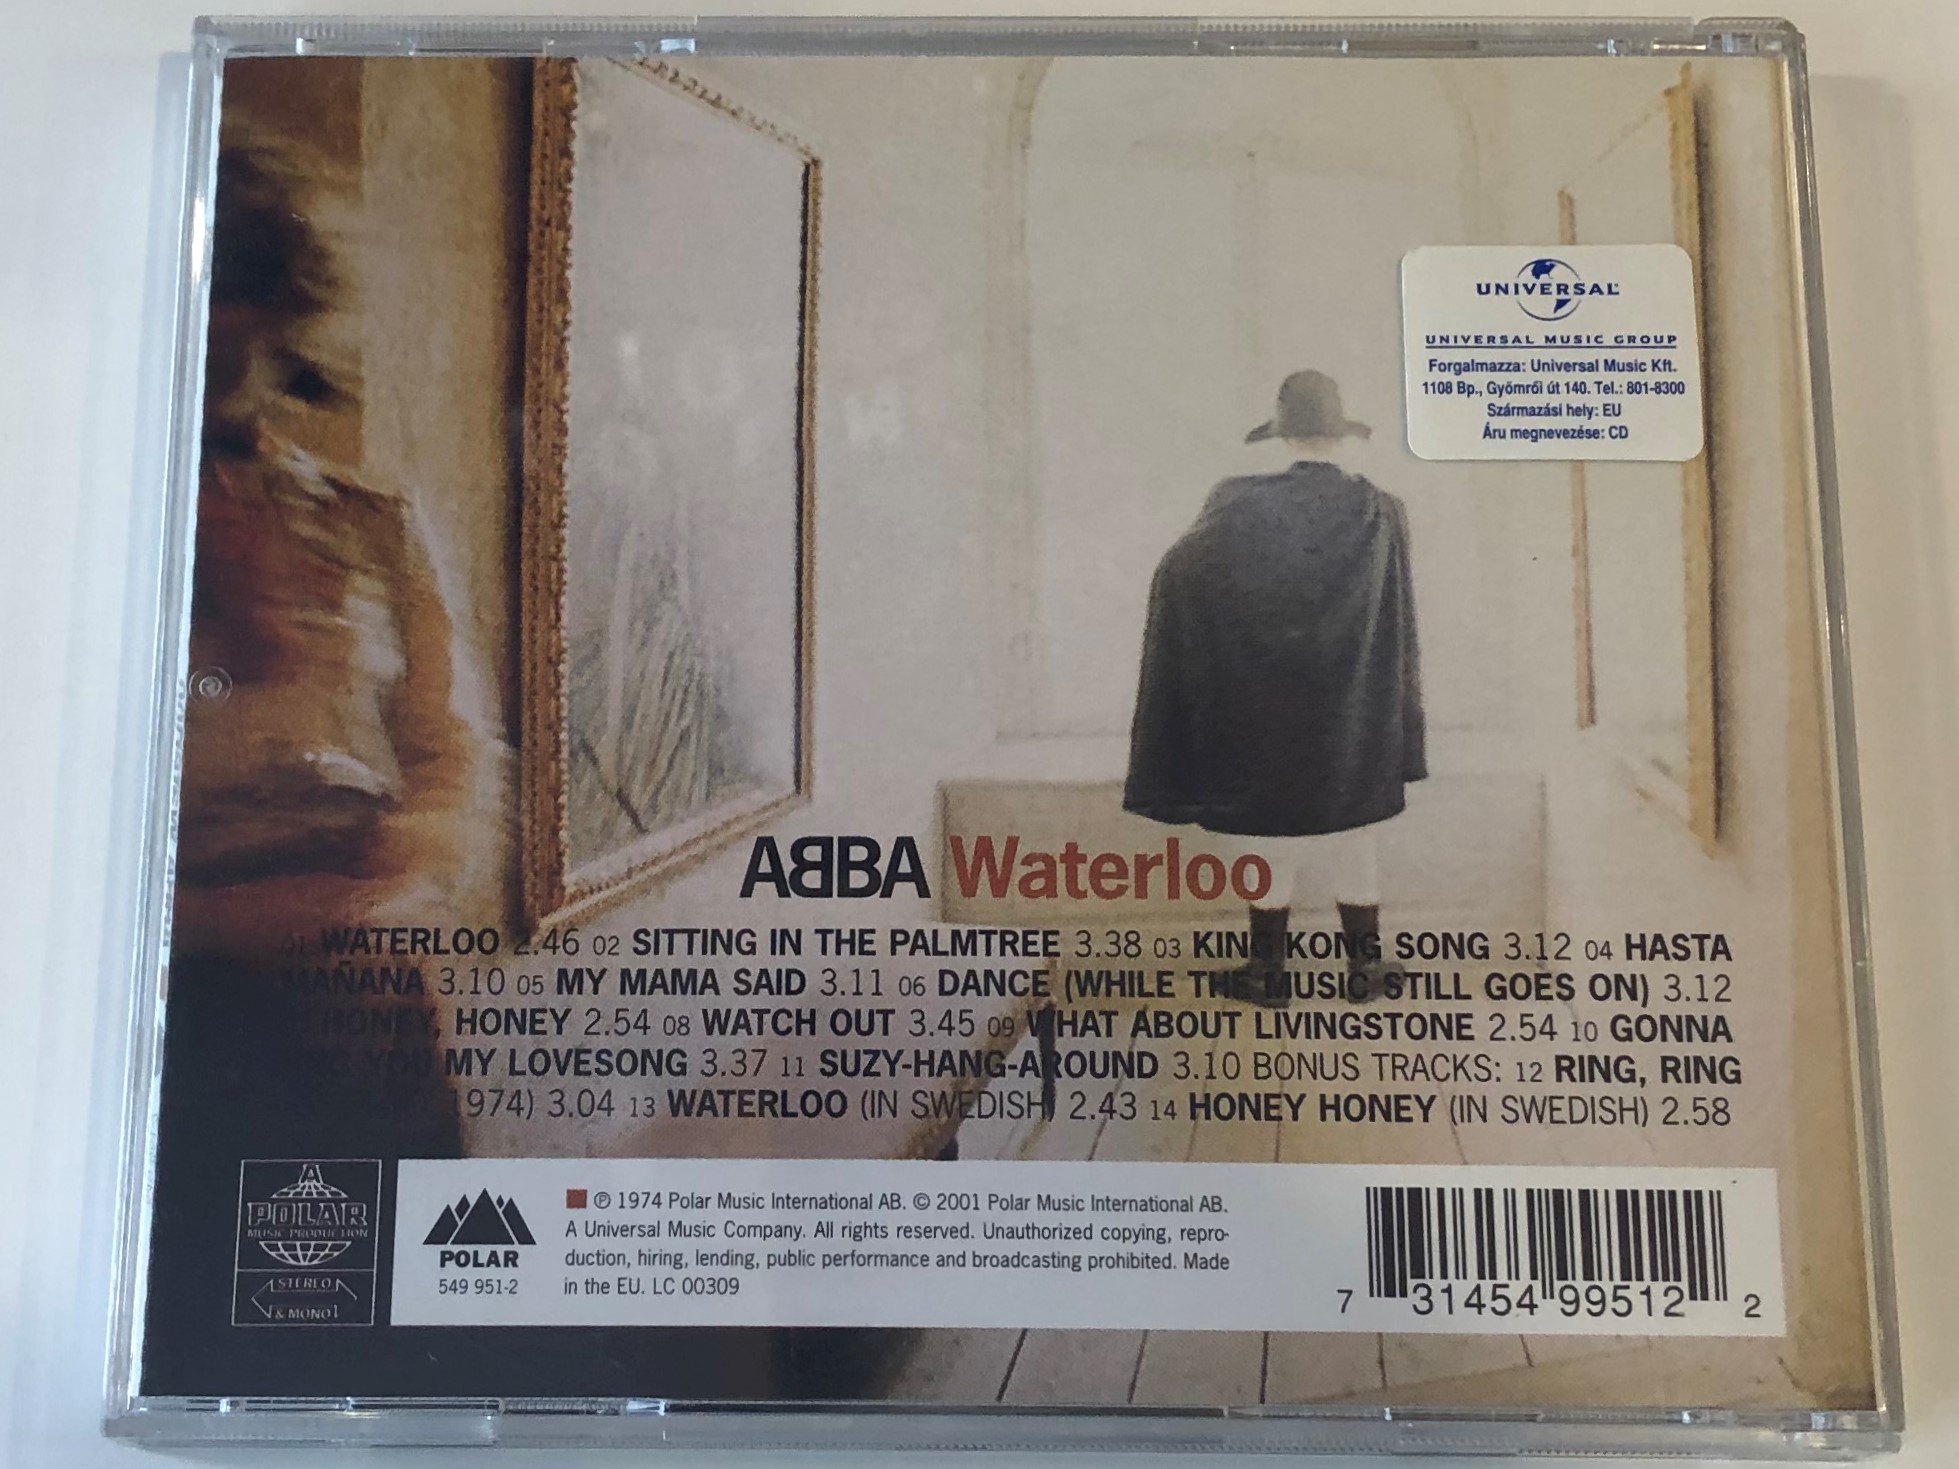 abba-waterloo-polar-audio-cd-2001-549-951-2-2-.jpg